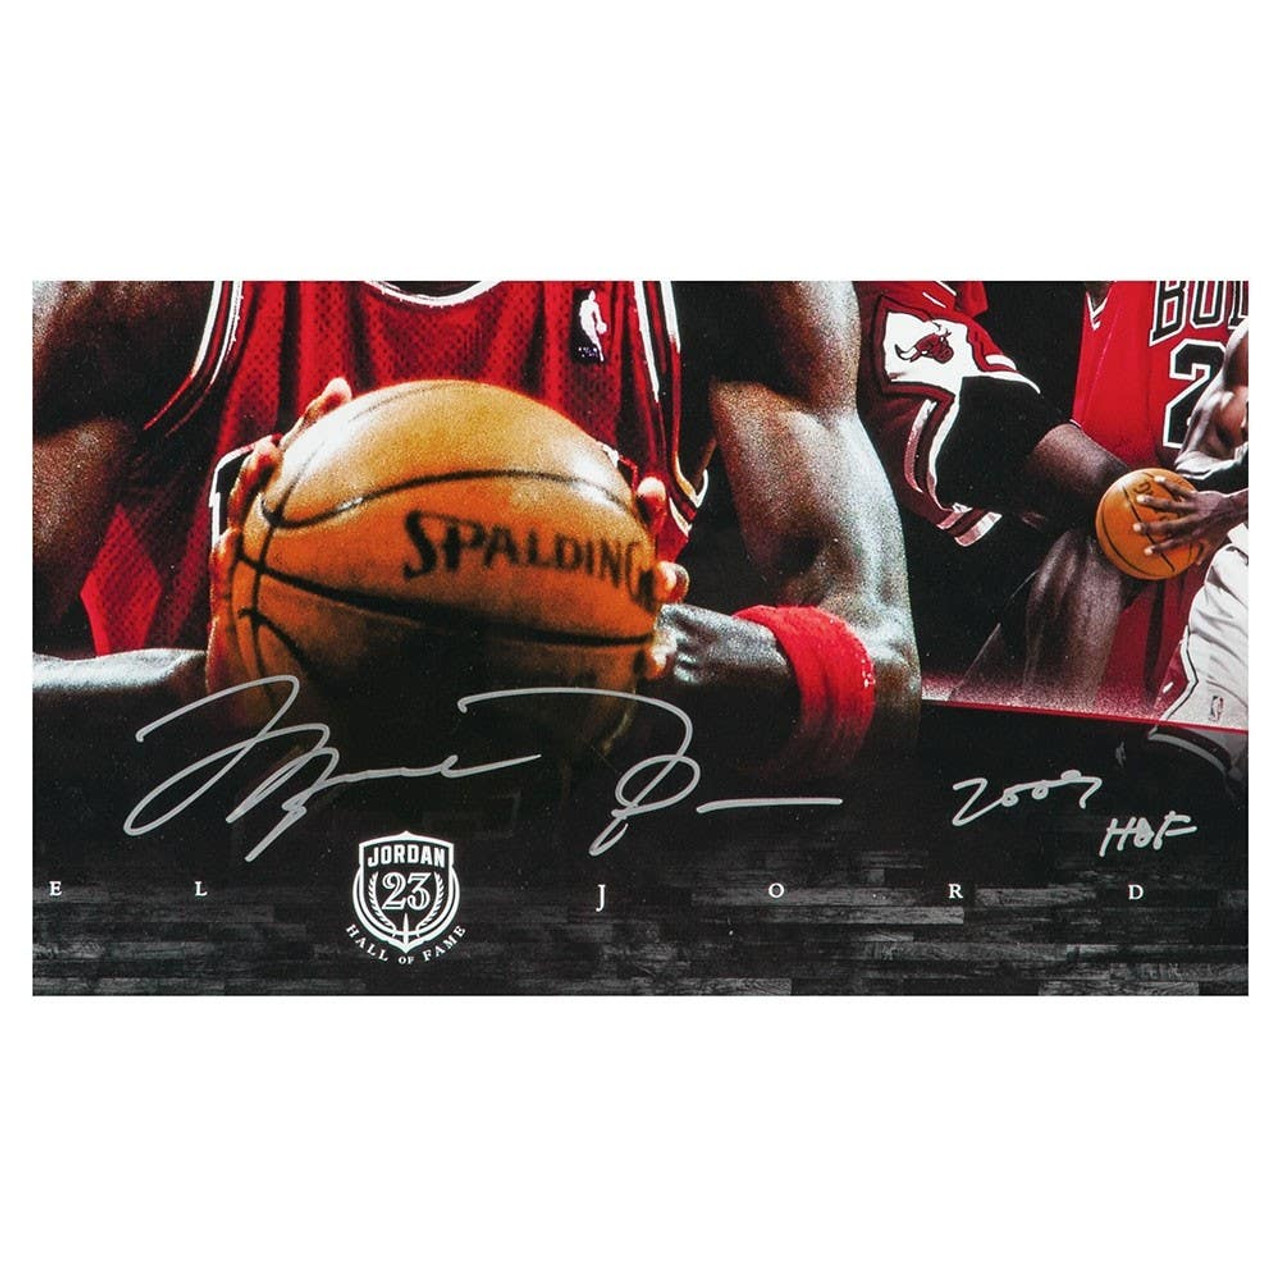 Michael Jordan Autographed Mitchell & Ness 1991 NBA All-Star Game Warmup  Jacket